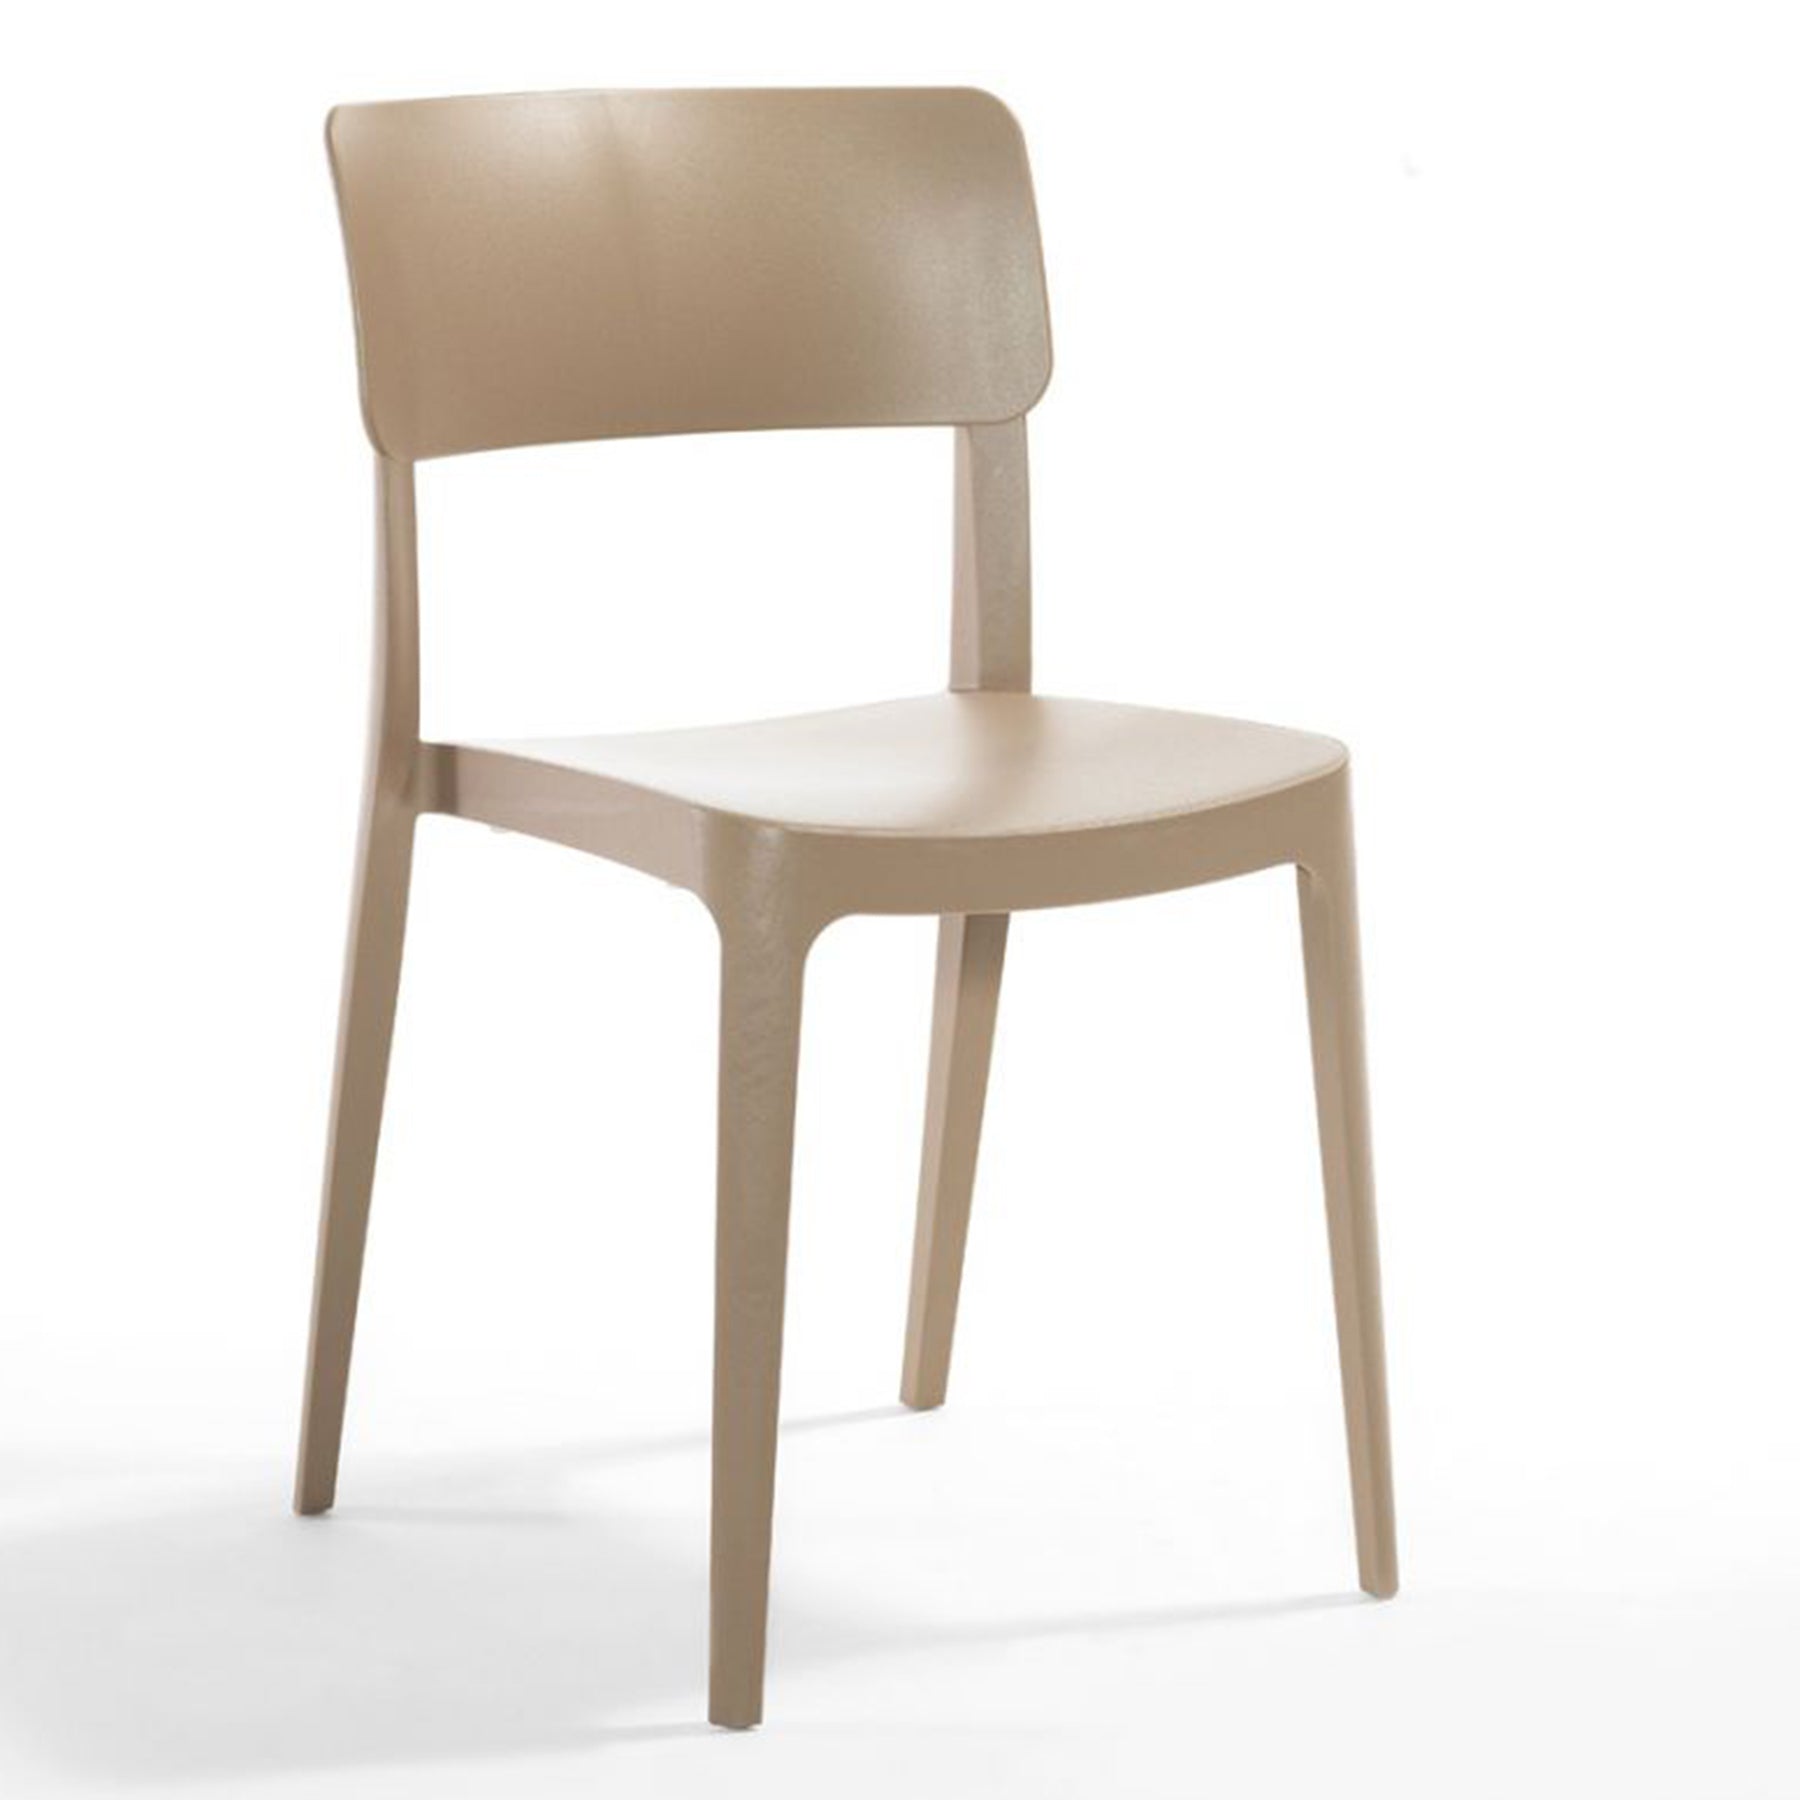 Plastic chair - Beige